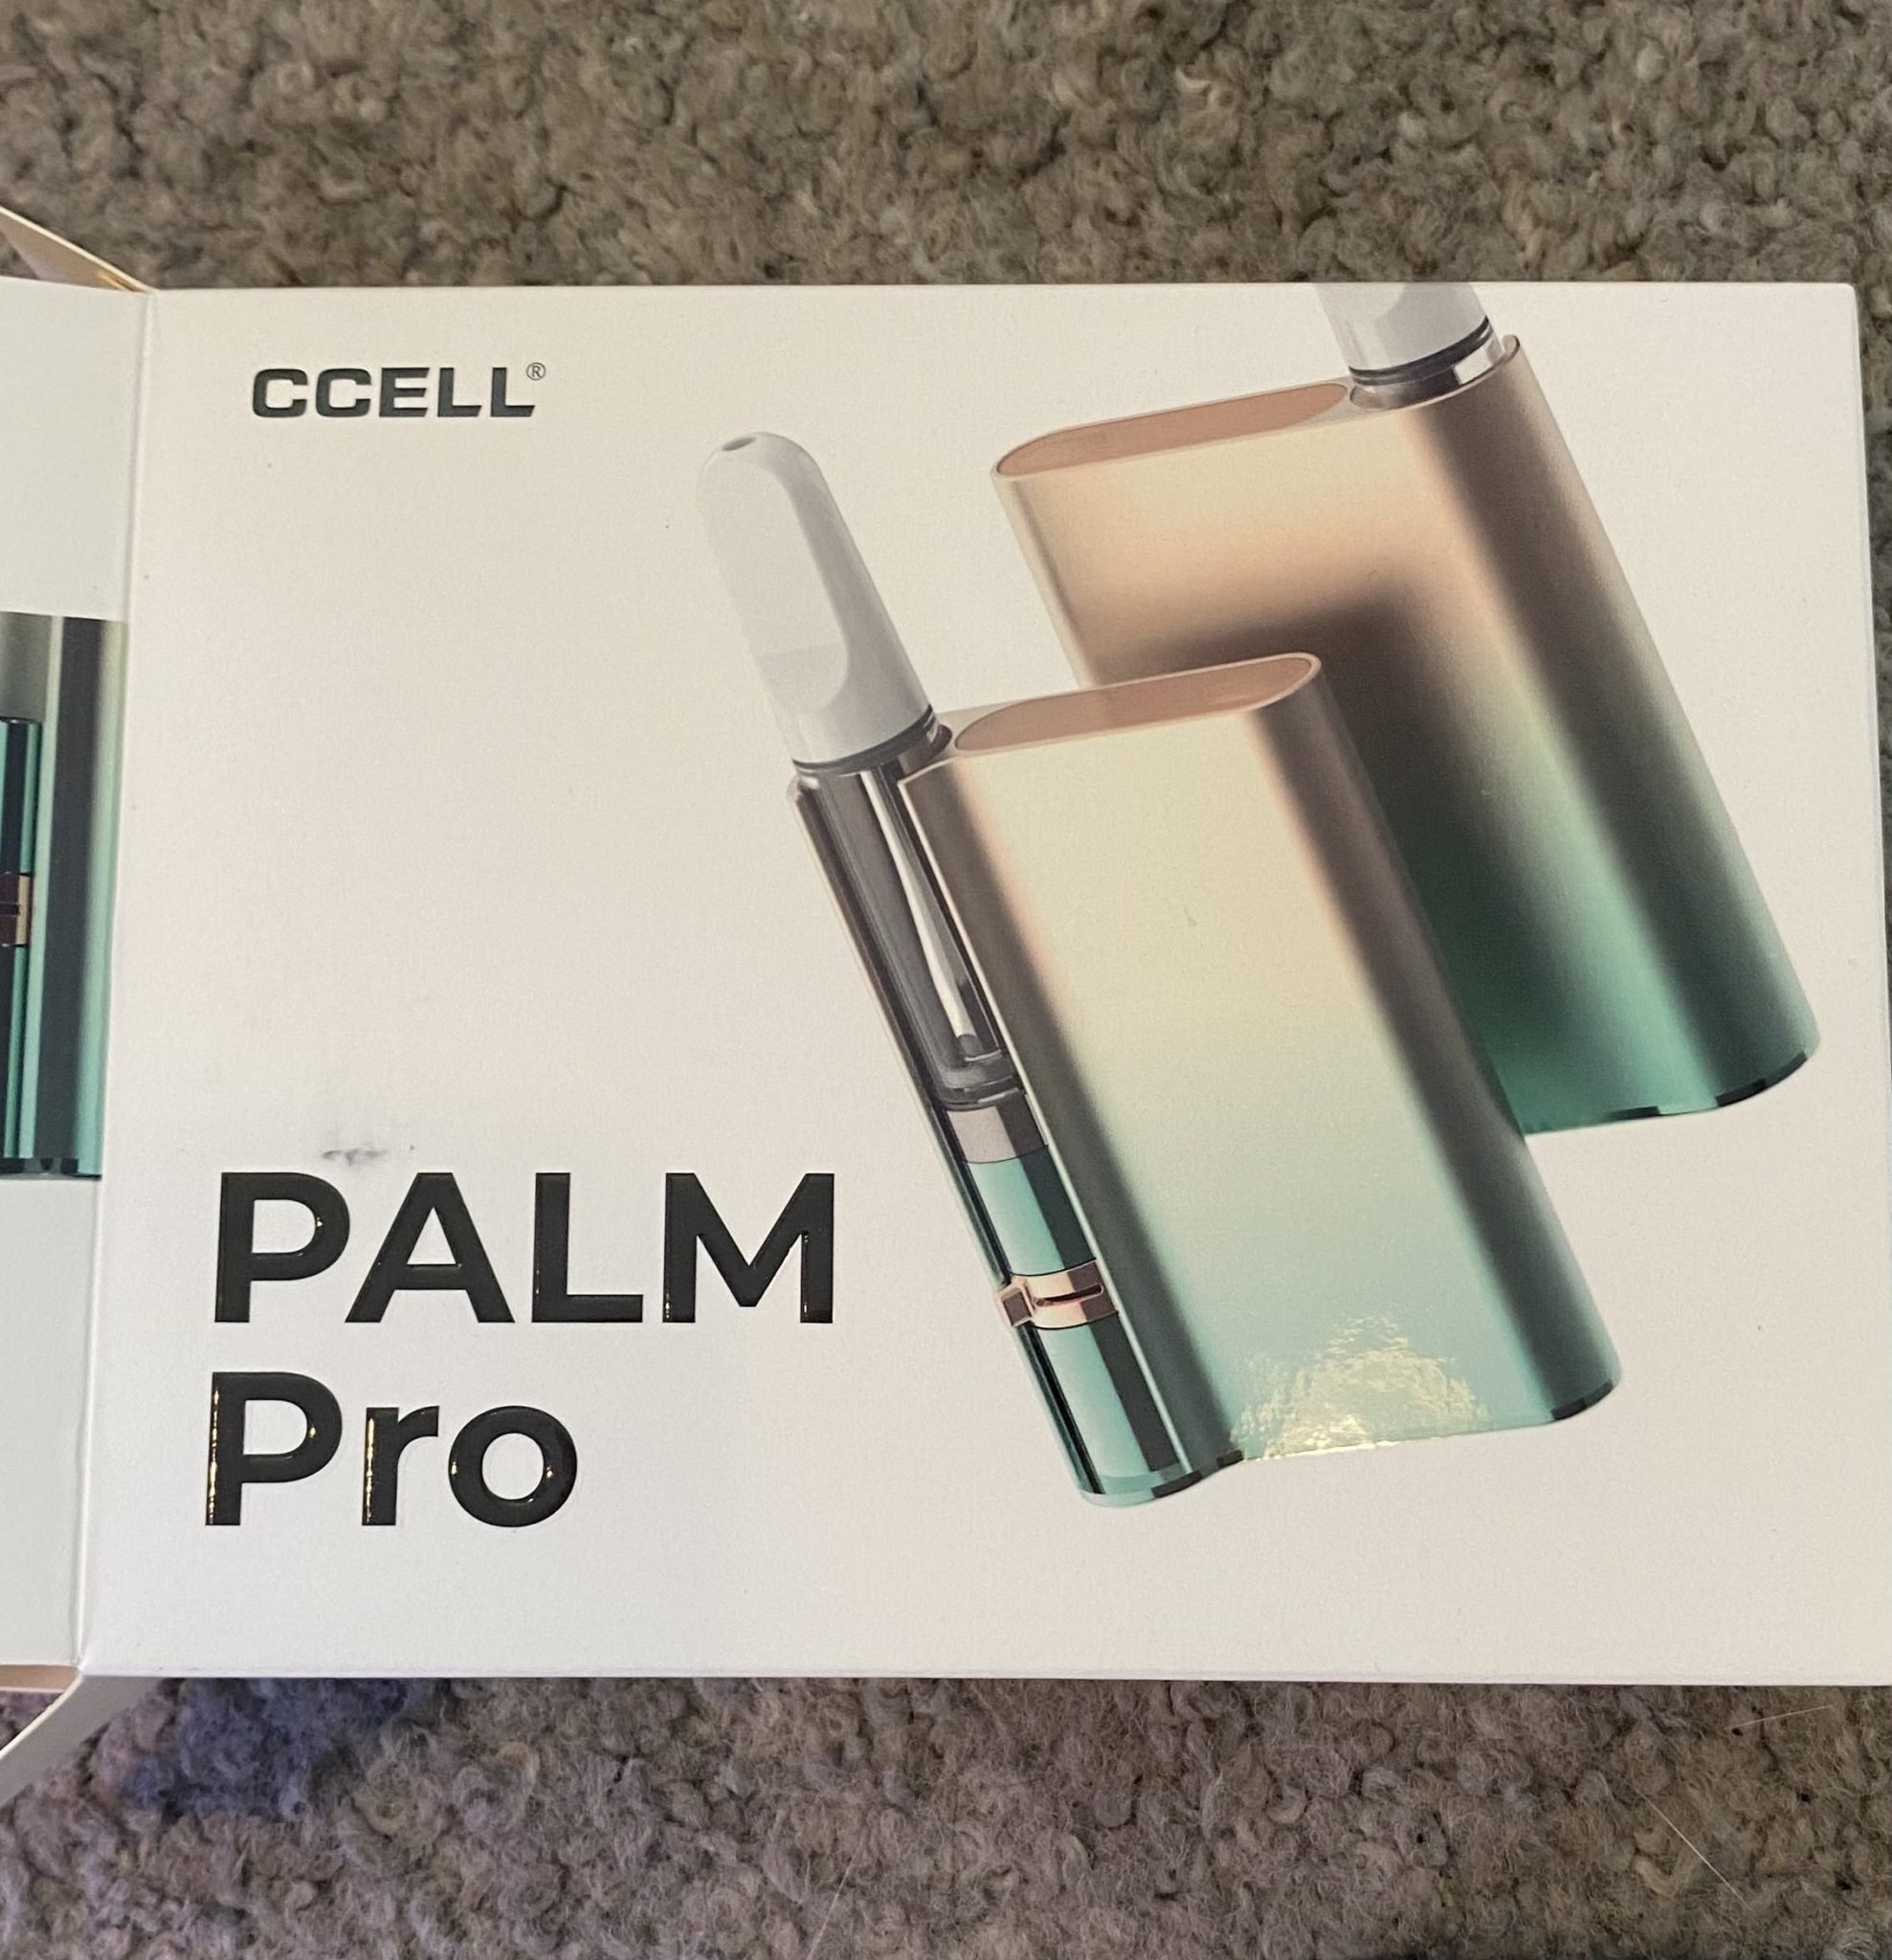 ccell palm pro box